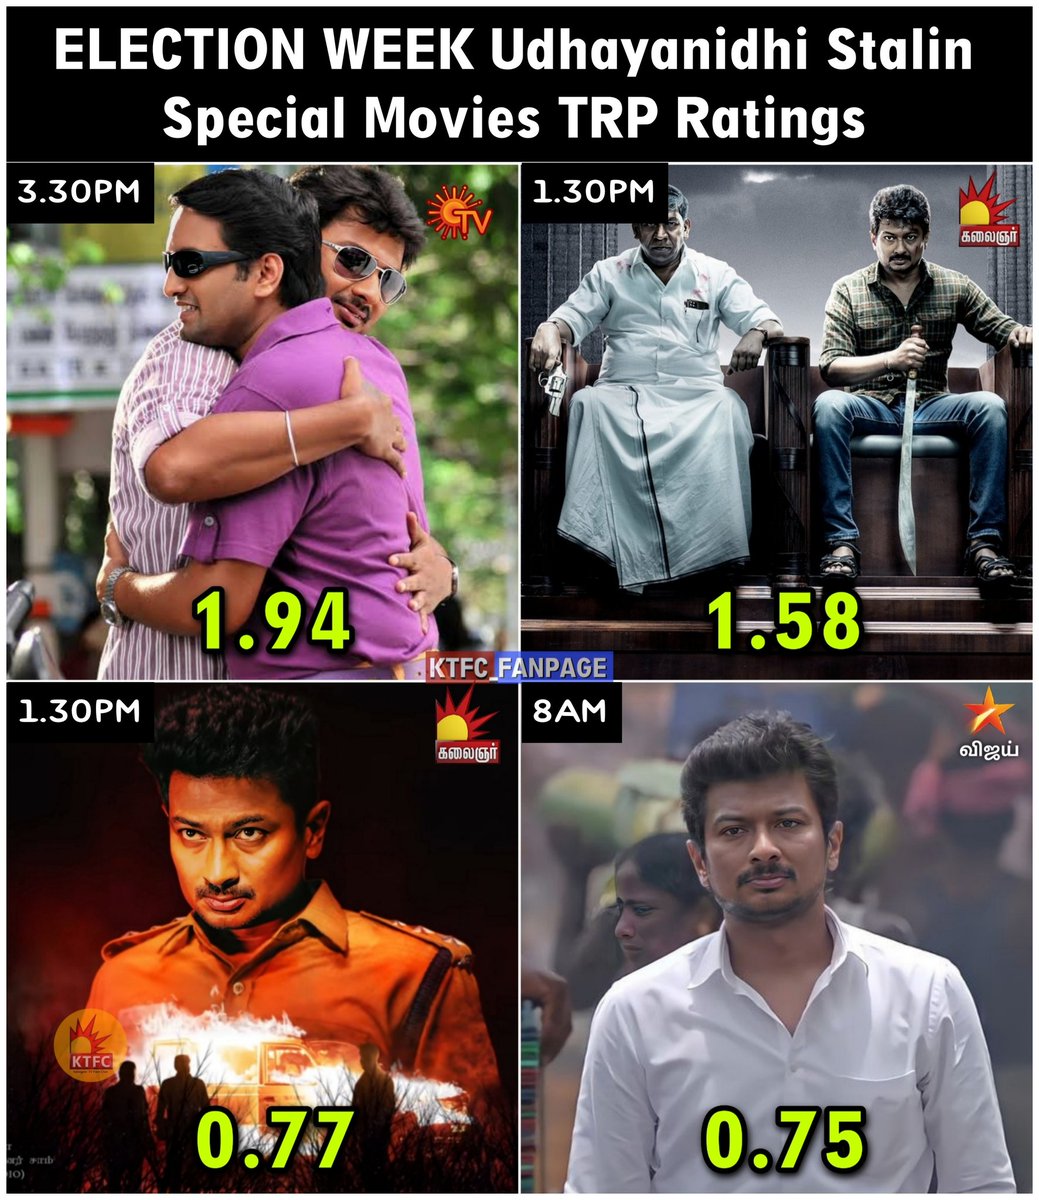 Election Week Special Udhayanidhi Stalin Movies U+R TRP Ratings

#OruKalOruKannadi - April 19, 3.30PM
#Maamannan - April 14, 1.30PM
#NenjukkuNeedhi - April 17, 1.30PM
#Manithan - April 19, 8AM 

#SunTV #VijayTV #KalaignarTV #udhaynidhistalin #Udhayanidhi #KeerthiSuresh #Hansika